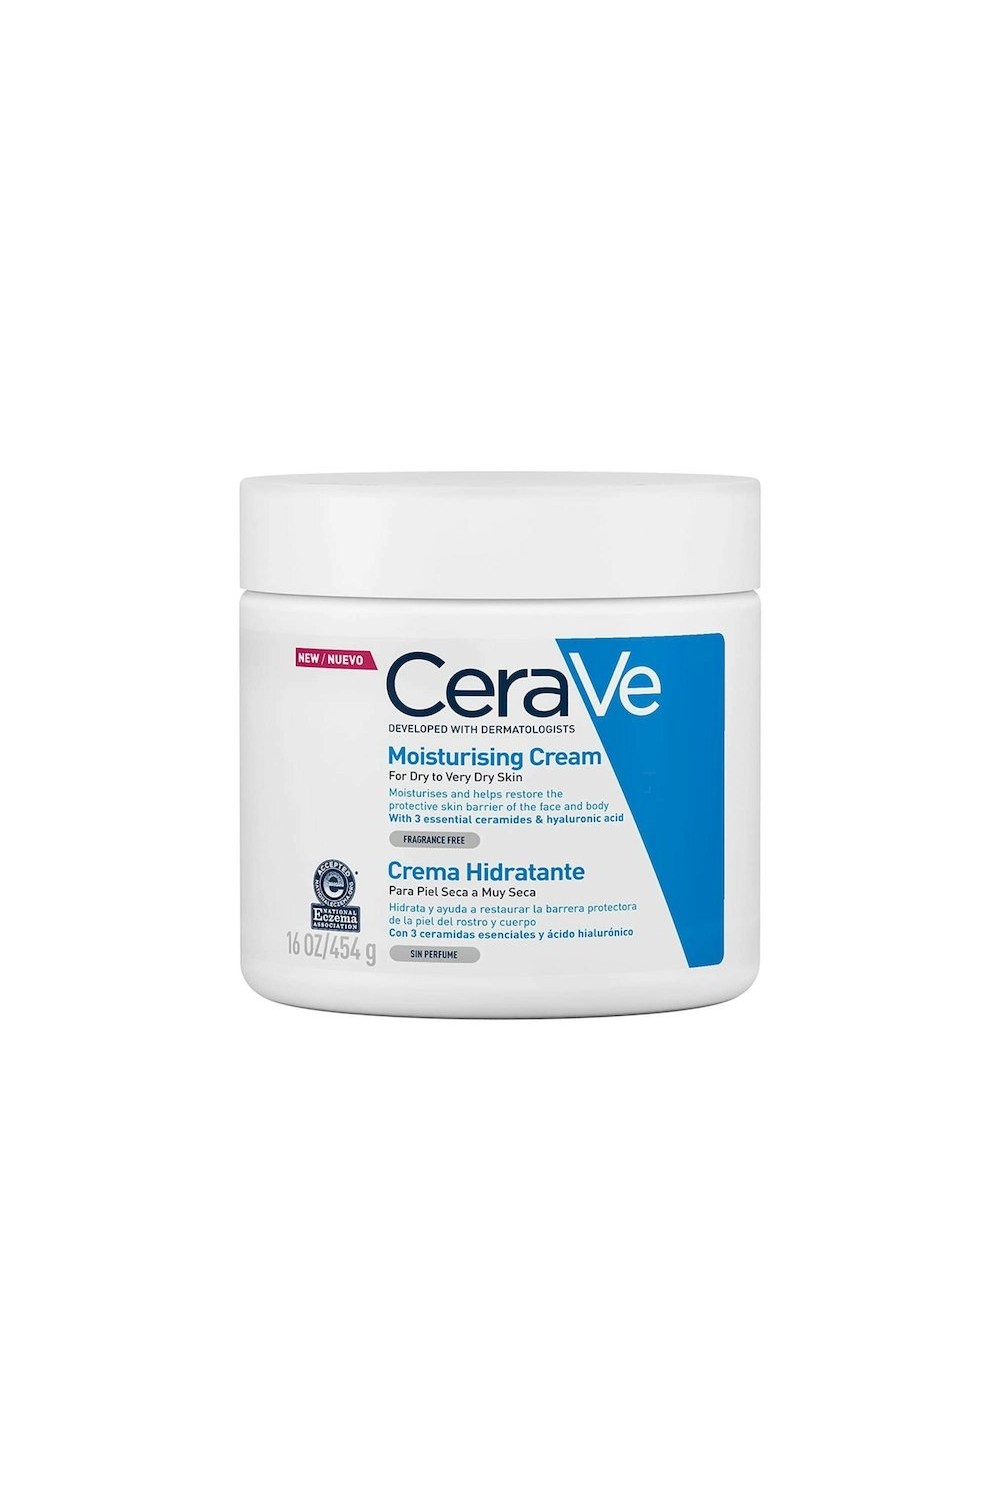 Cerave  Moisturizing Cream 454g